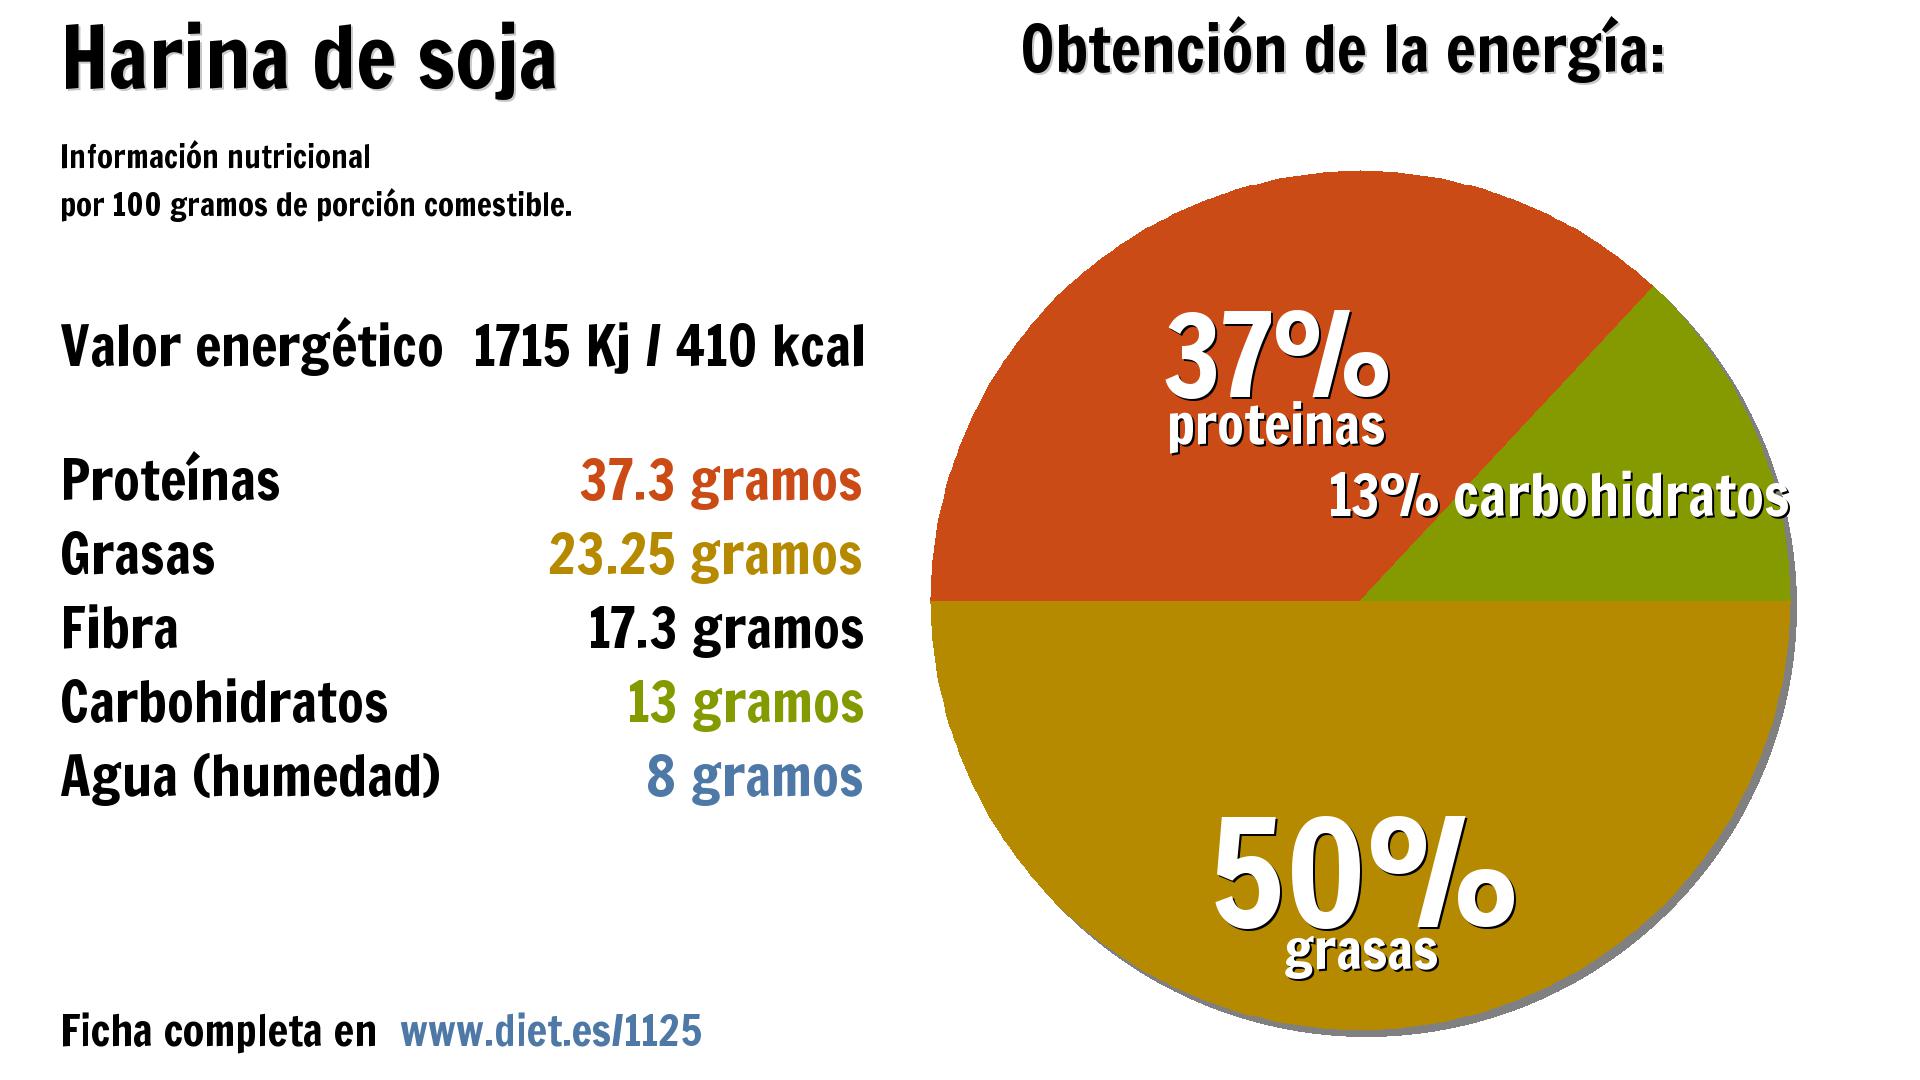 Harina de soja: energía 1715 Kj, proteínas 37 g., grasas 23 g., fibra 17 g., carbohidratos 13 g. y agua 8 g.